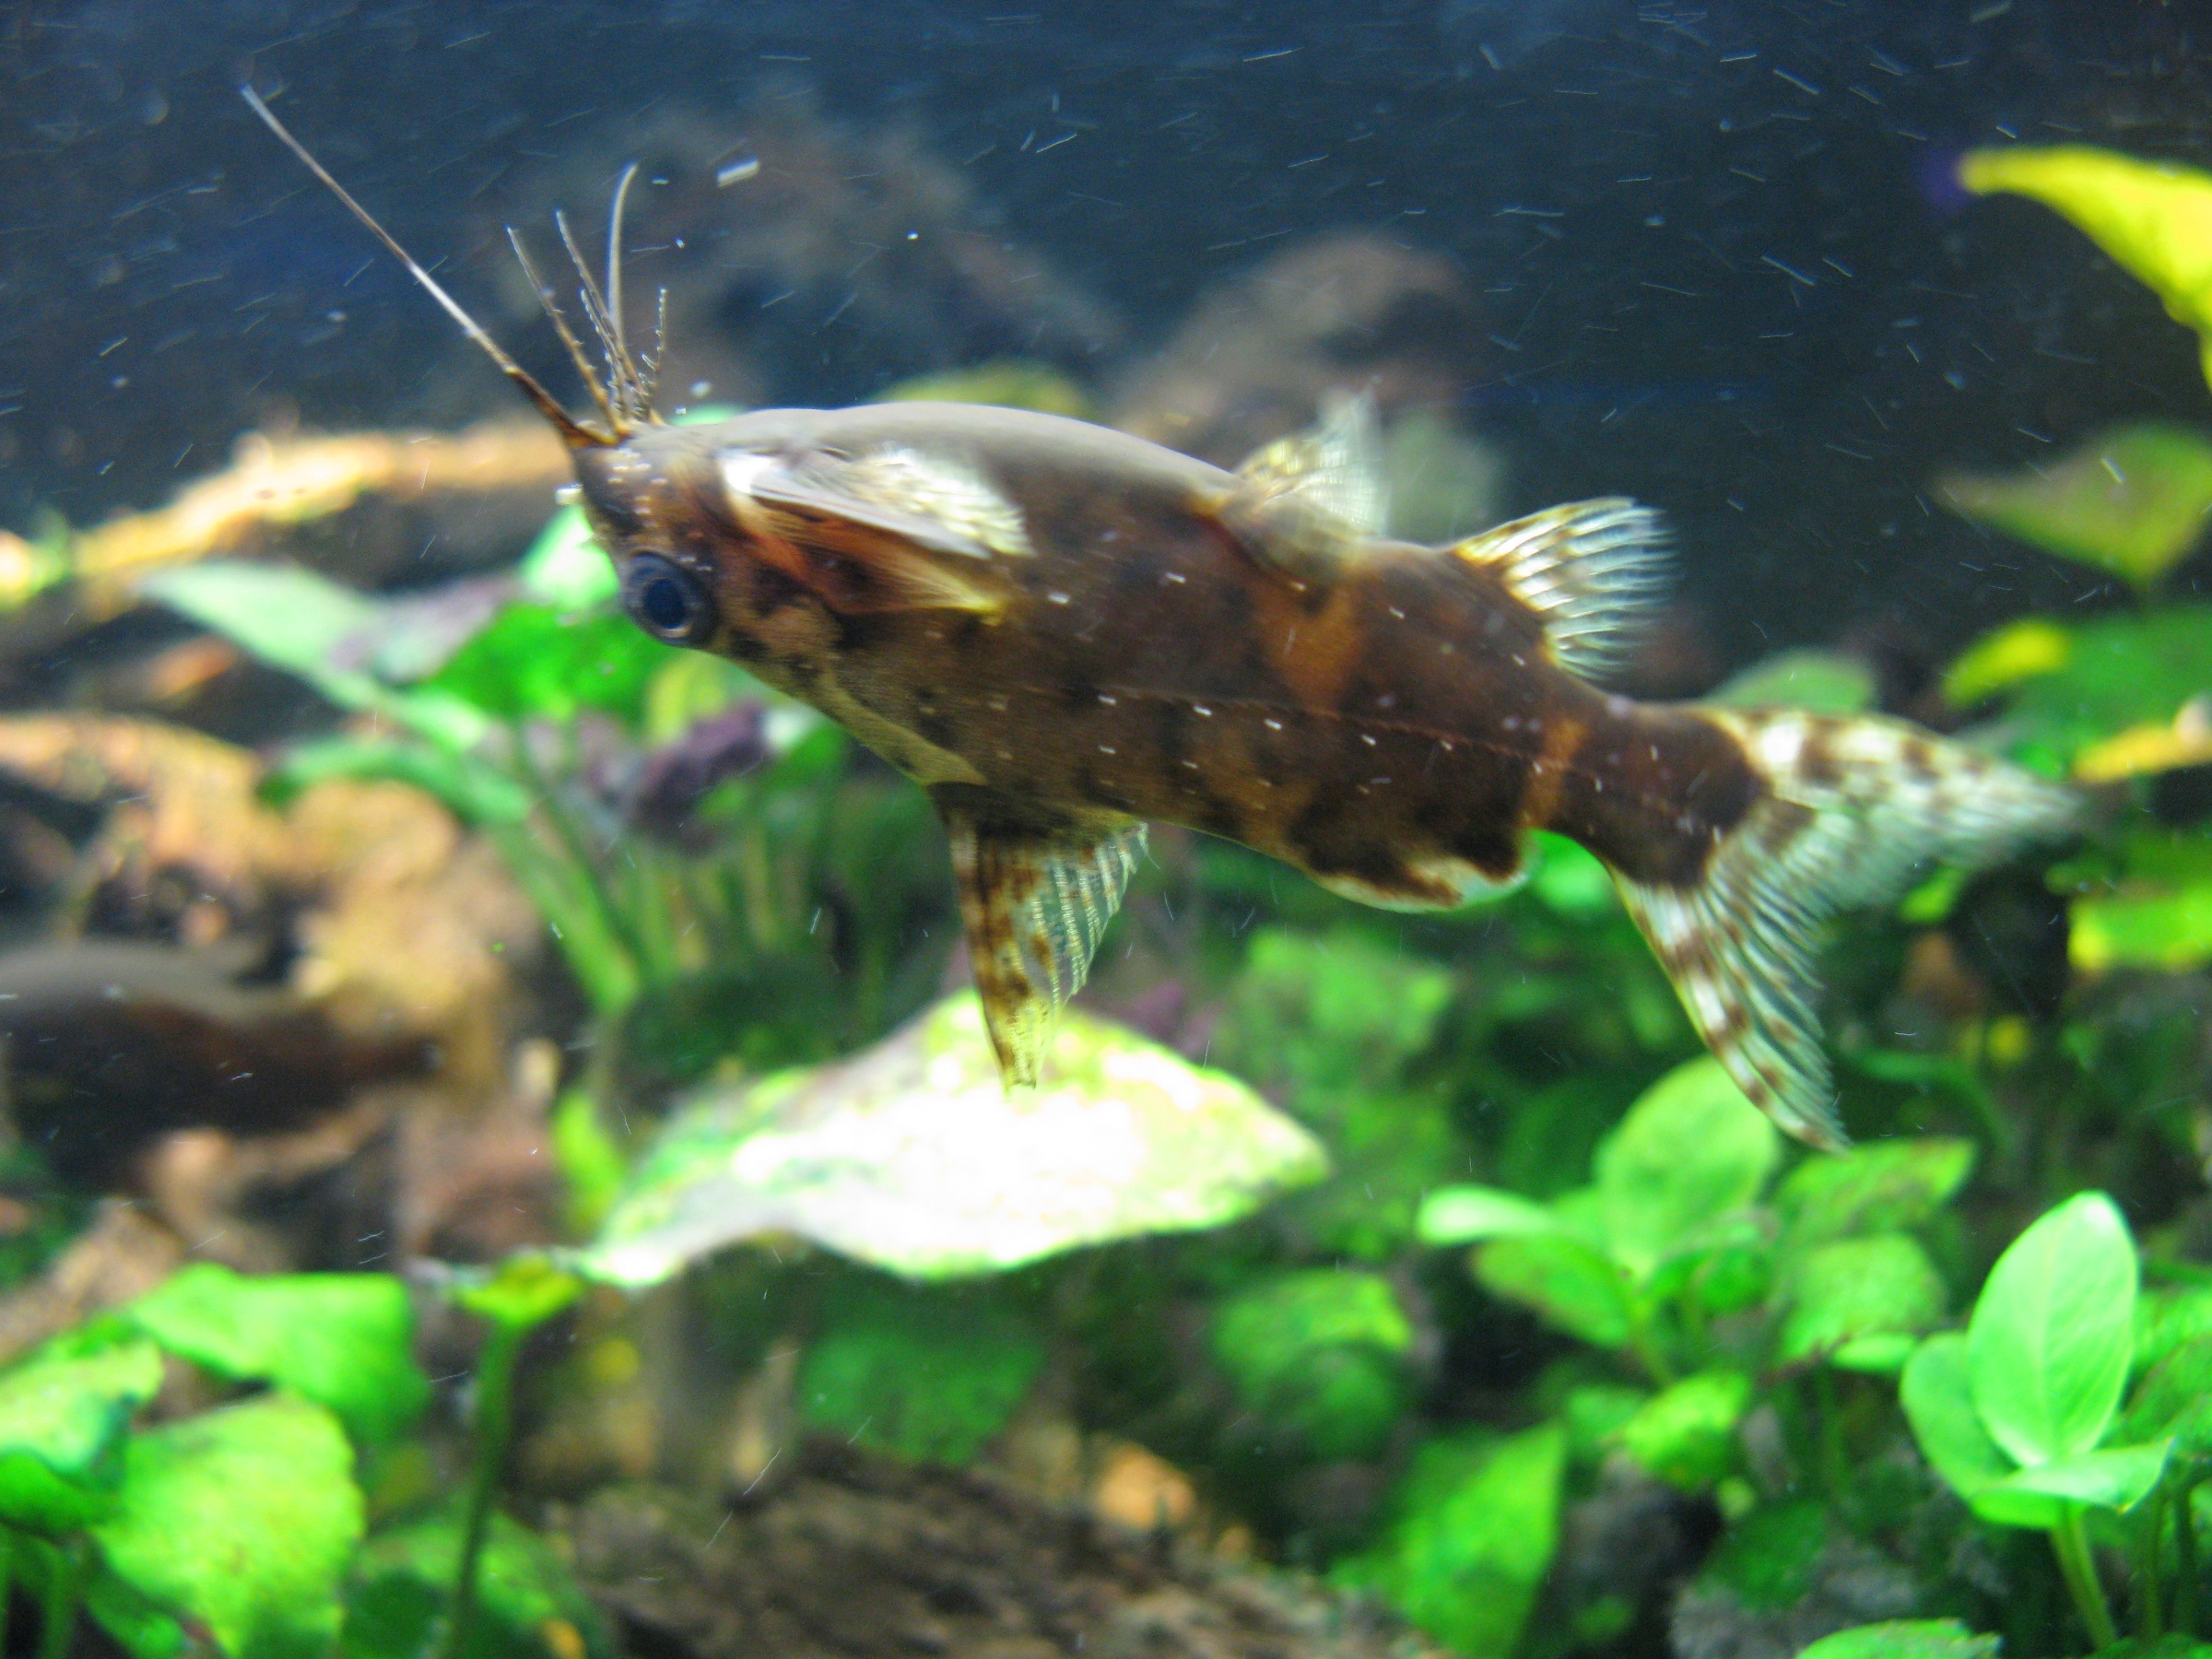 Upside-down catfish in the aquarium wallpaper